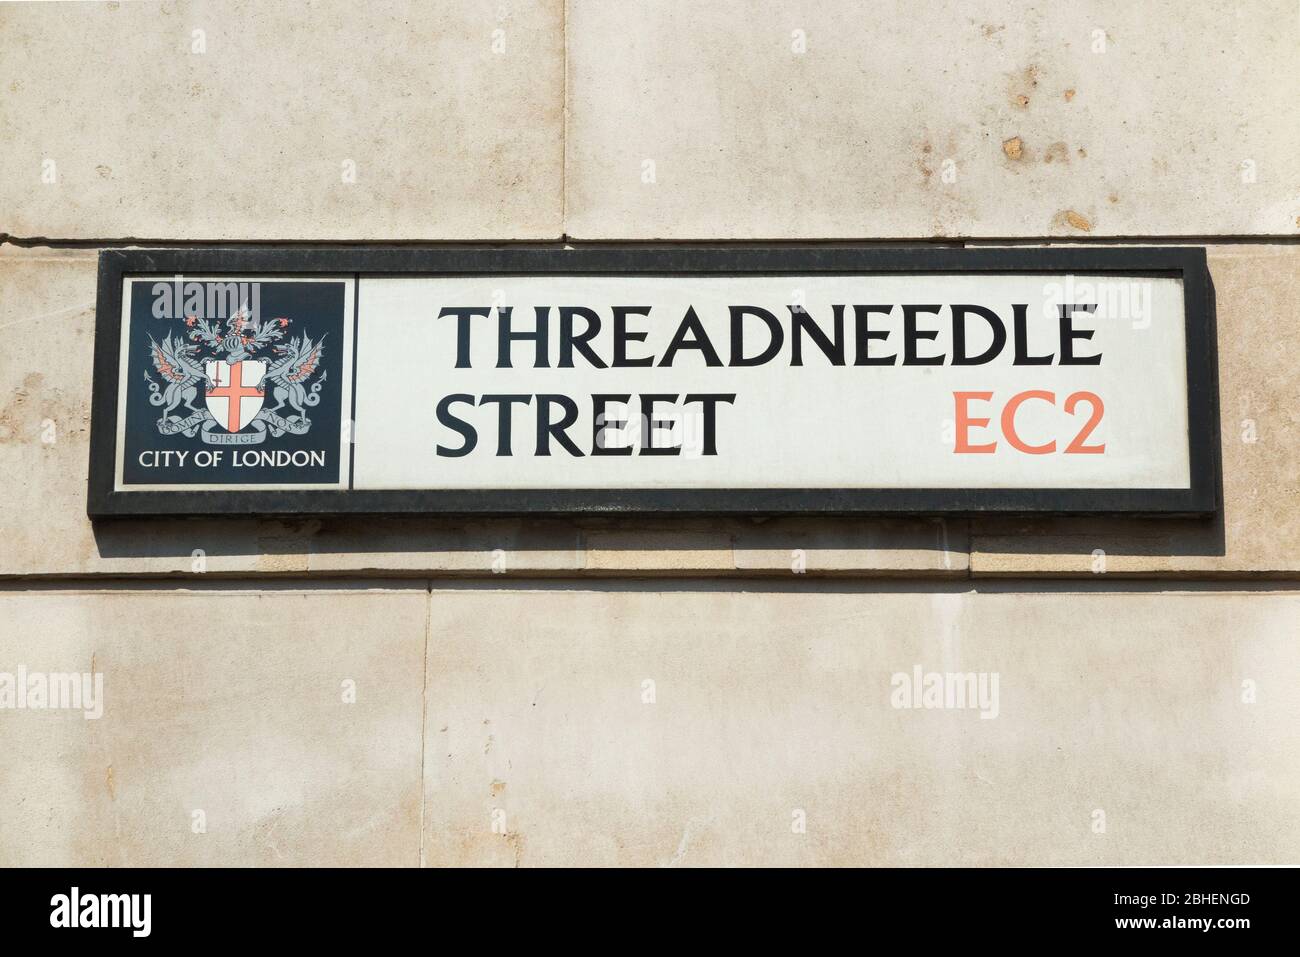 Threadneedle Straßenschild in der City of London, an der Wand der Bank of England. London EC2 London. GROSSBRITANNIEN. (118) Stockfoto